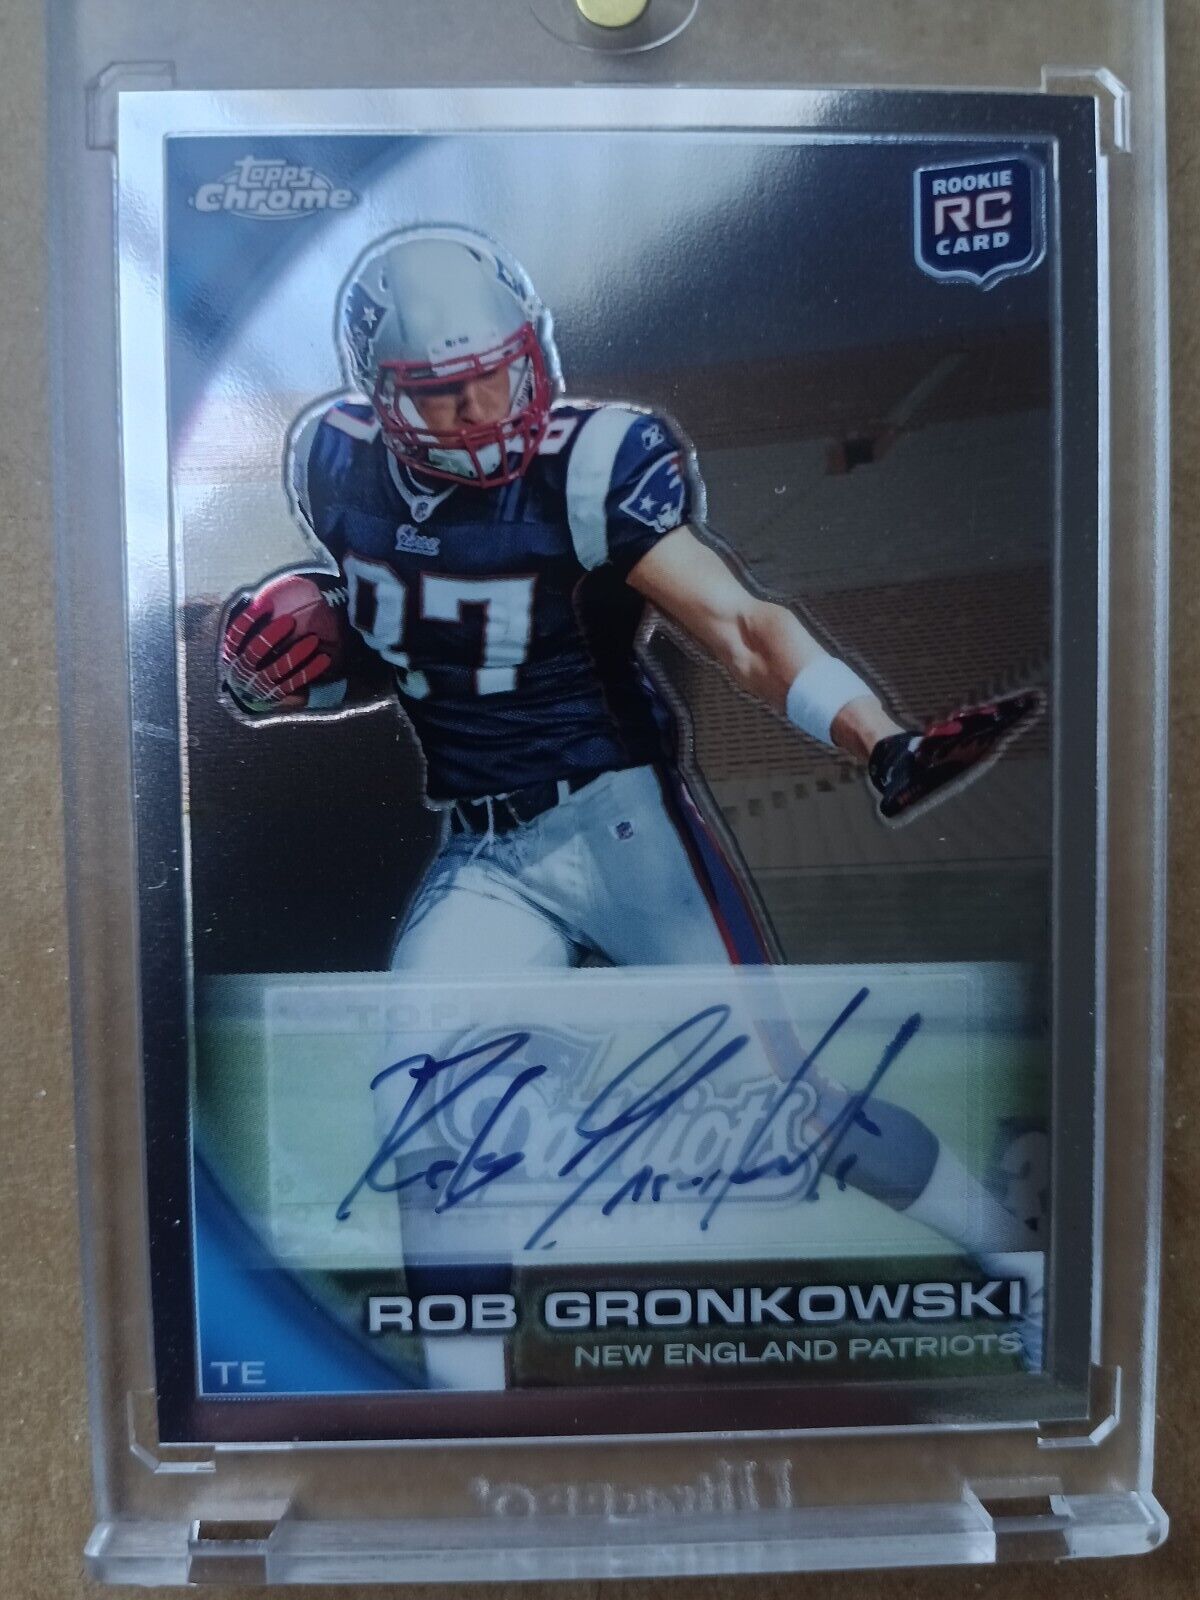 2010 Topps Chrome Rookie Card Rob Gronkowski Autograph card